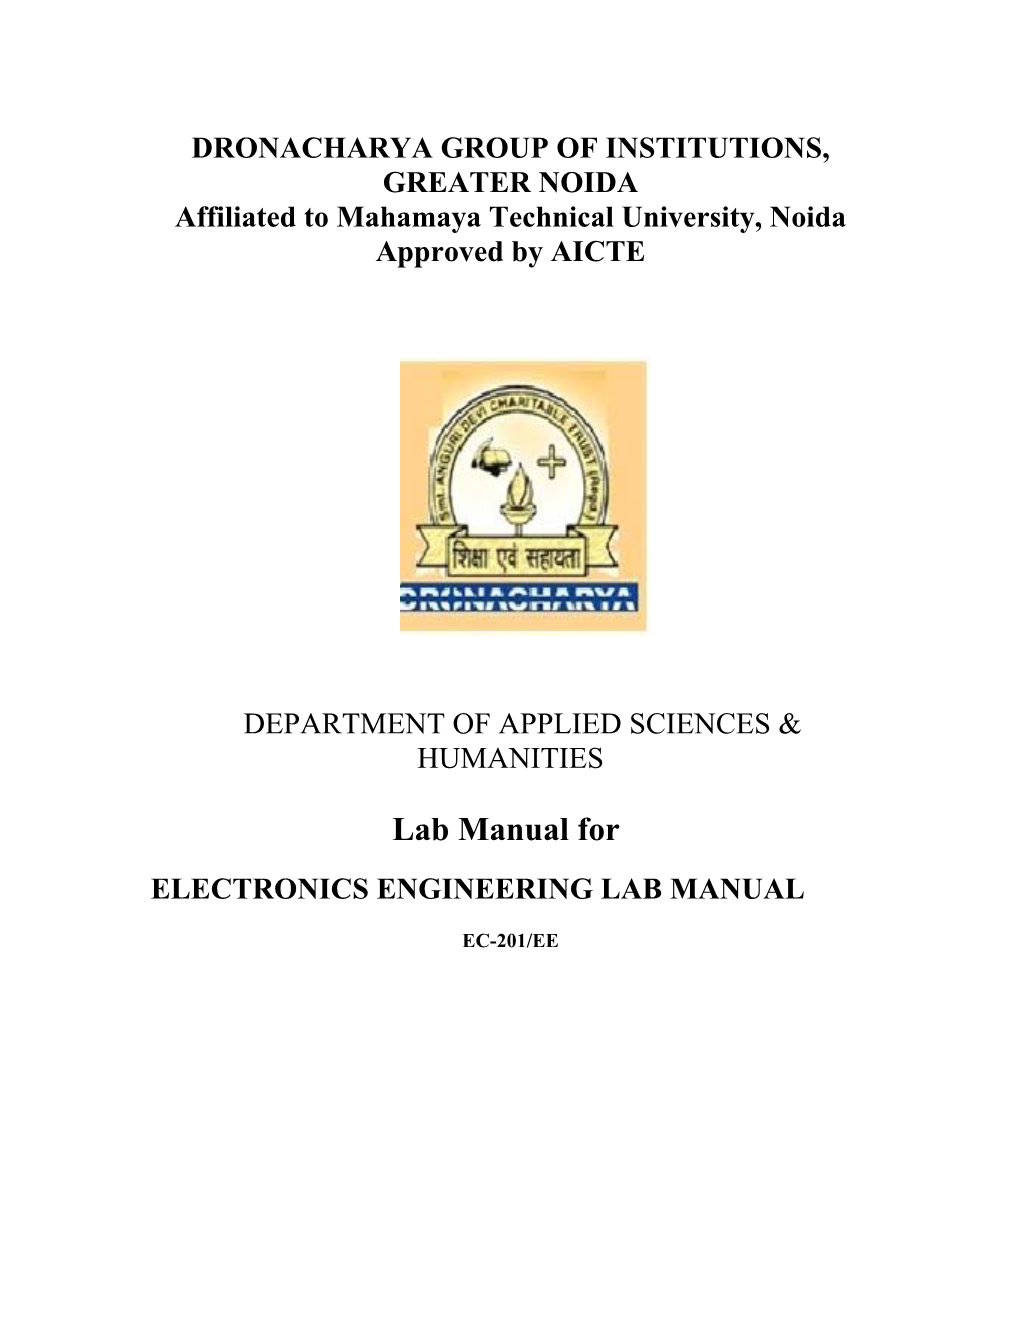 Electronics Engineering Lab Manual